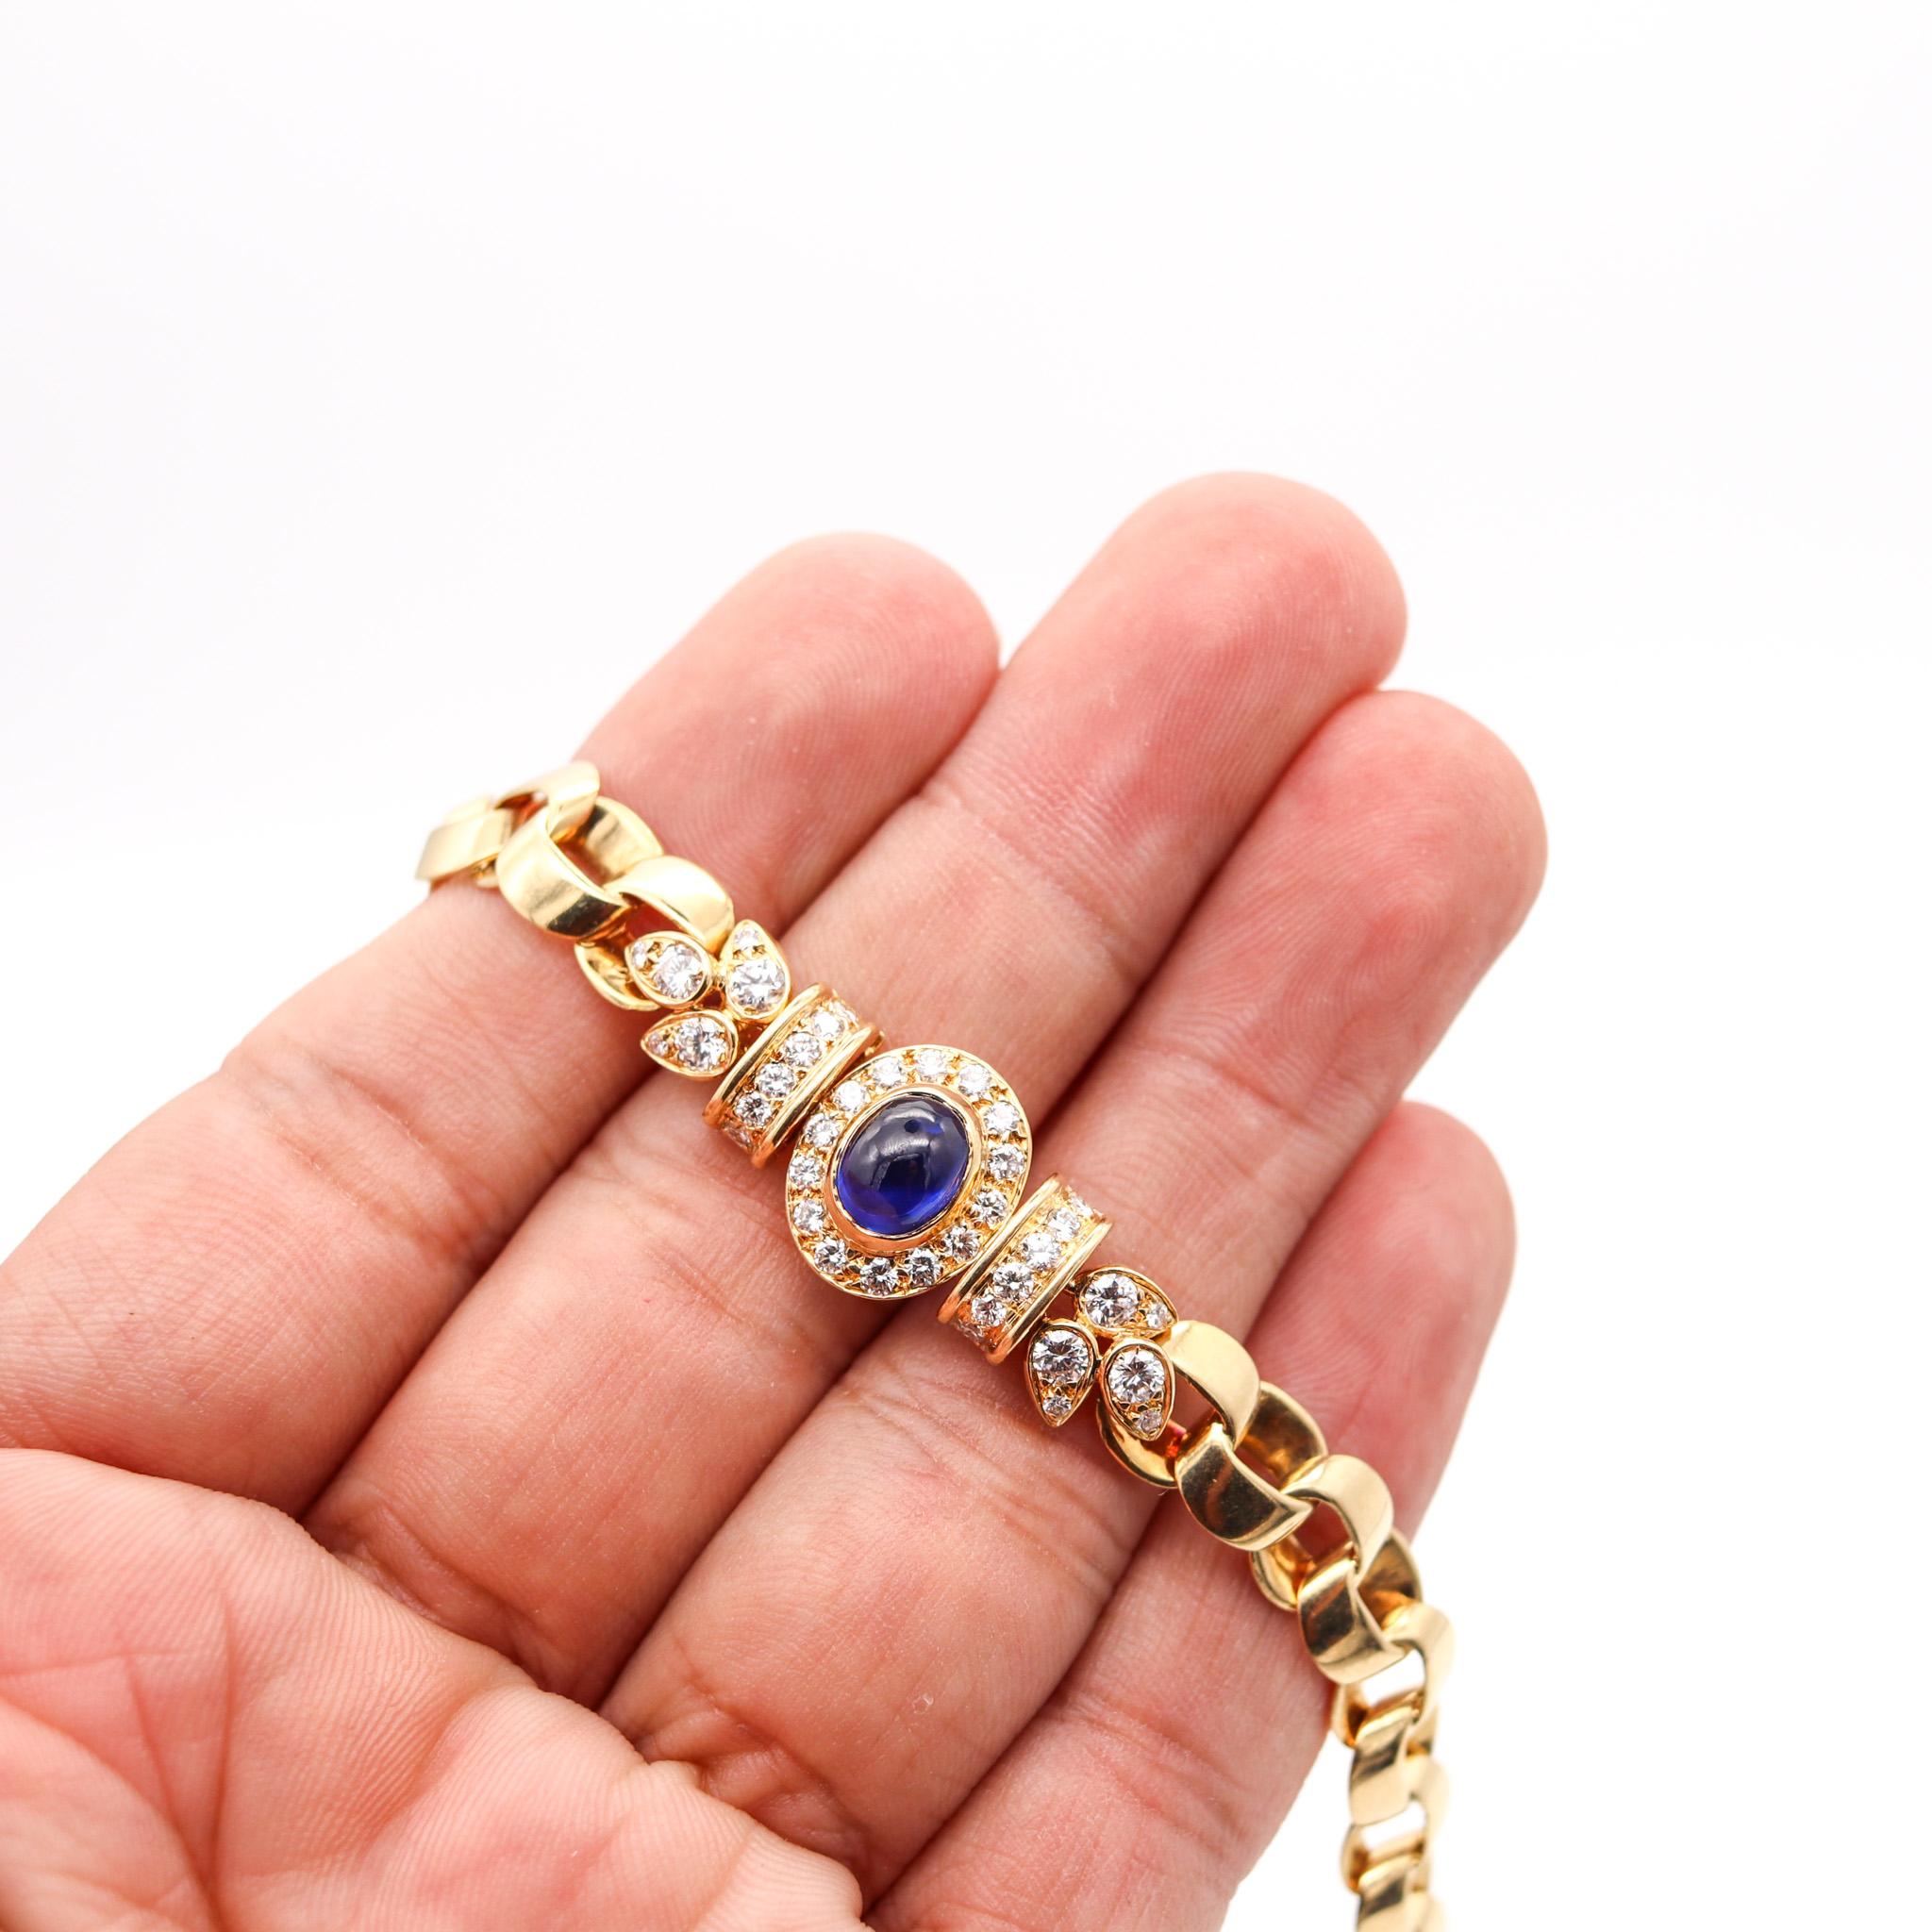 Van Cleef & Arpels Paris Necklace In 18Kt Gold With 3.63 Ctw Diamonds & Sapphire For Sale 2